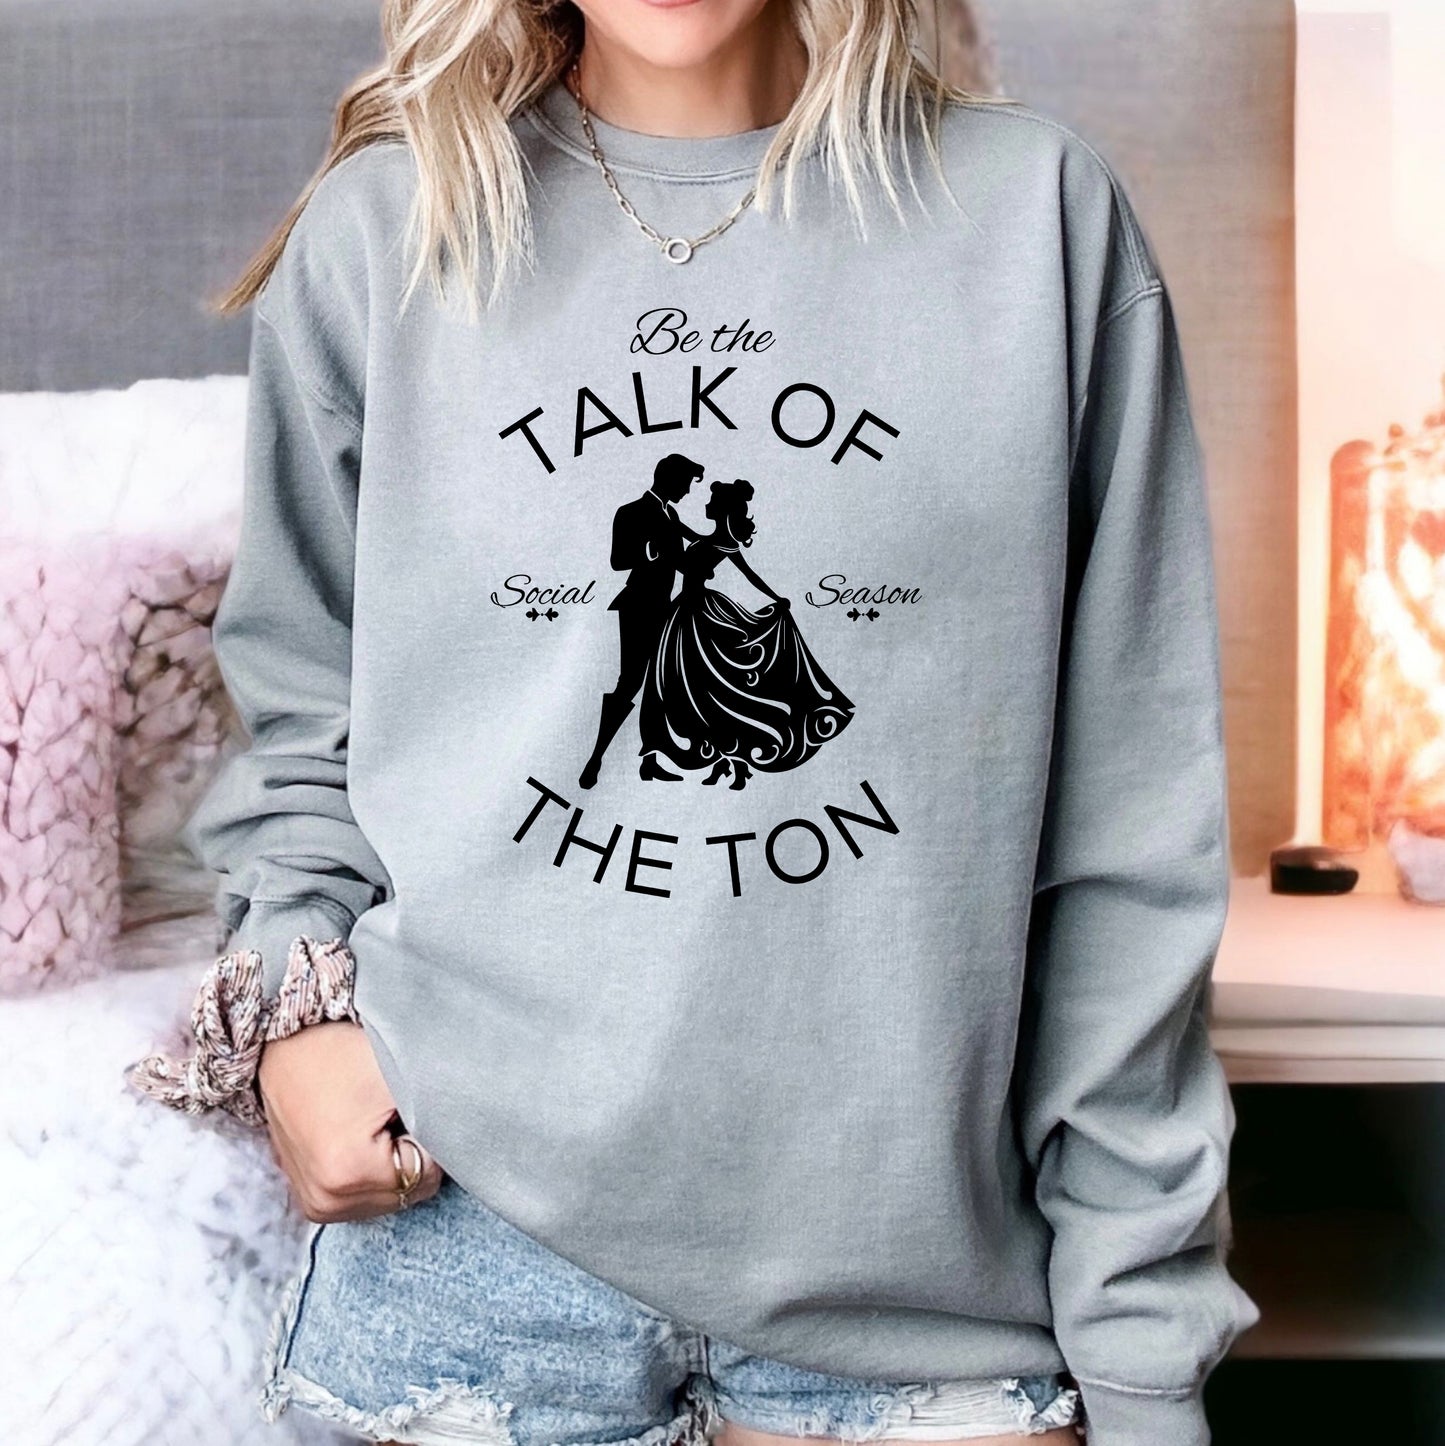 Talk Of The Ton | Garment Dyed Sweatshirt